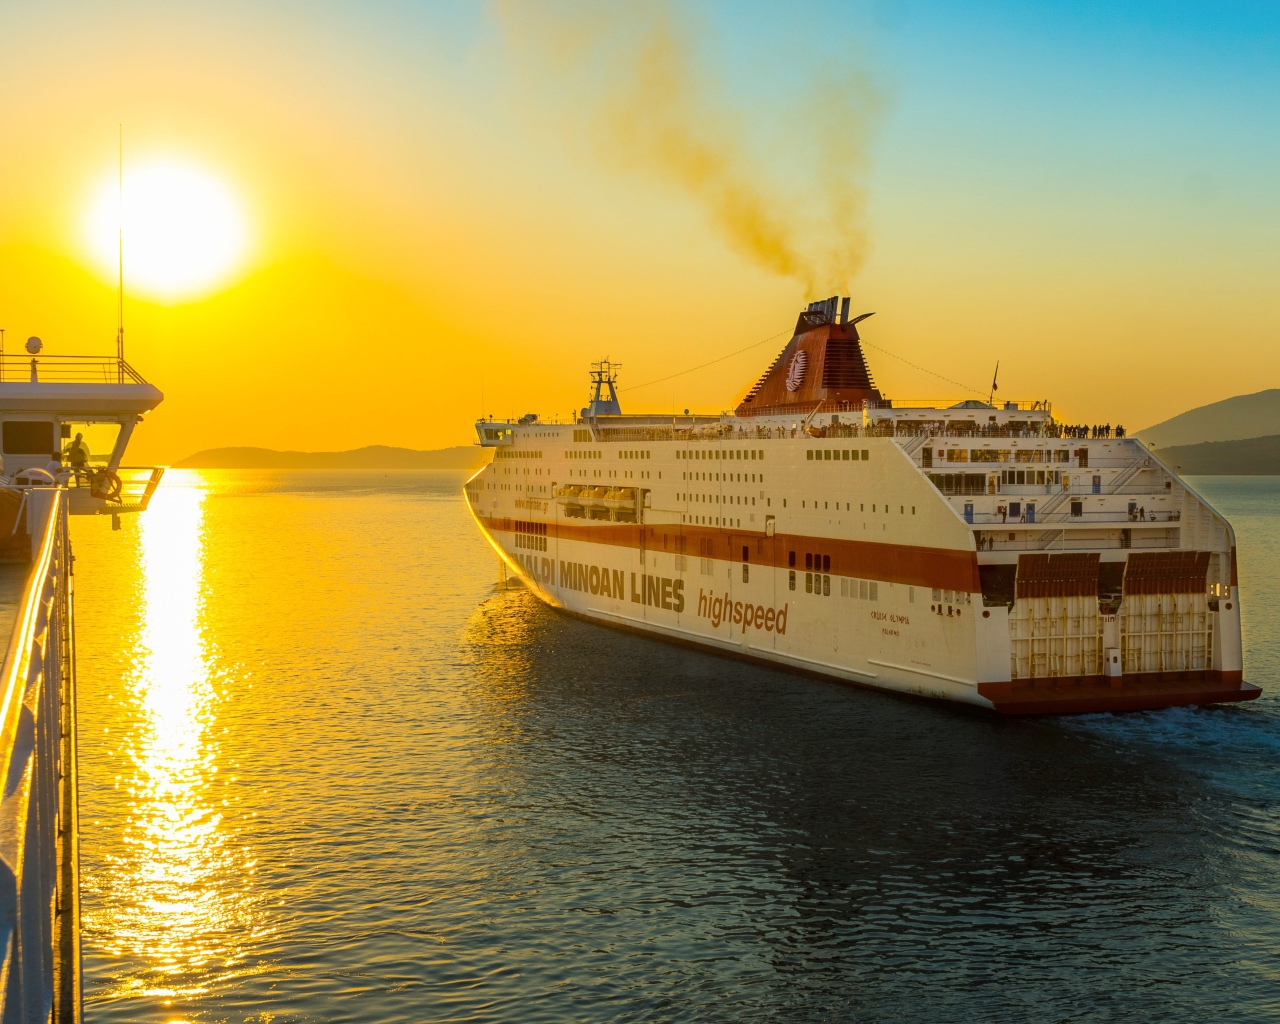 Large cruise ship sailing into the sunset